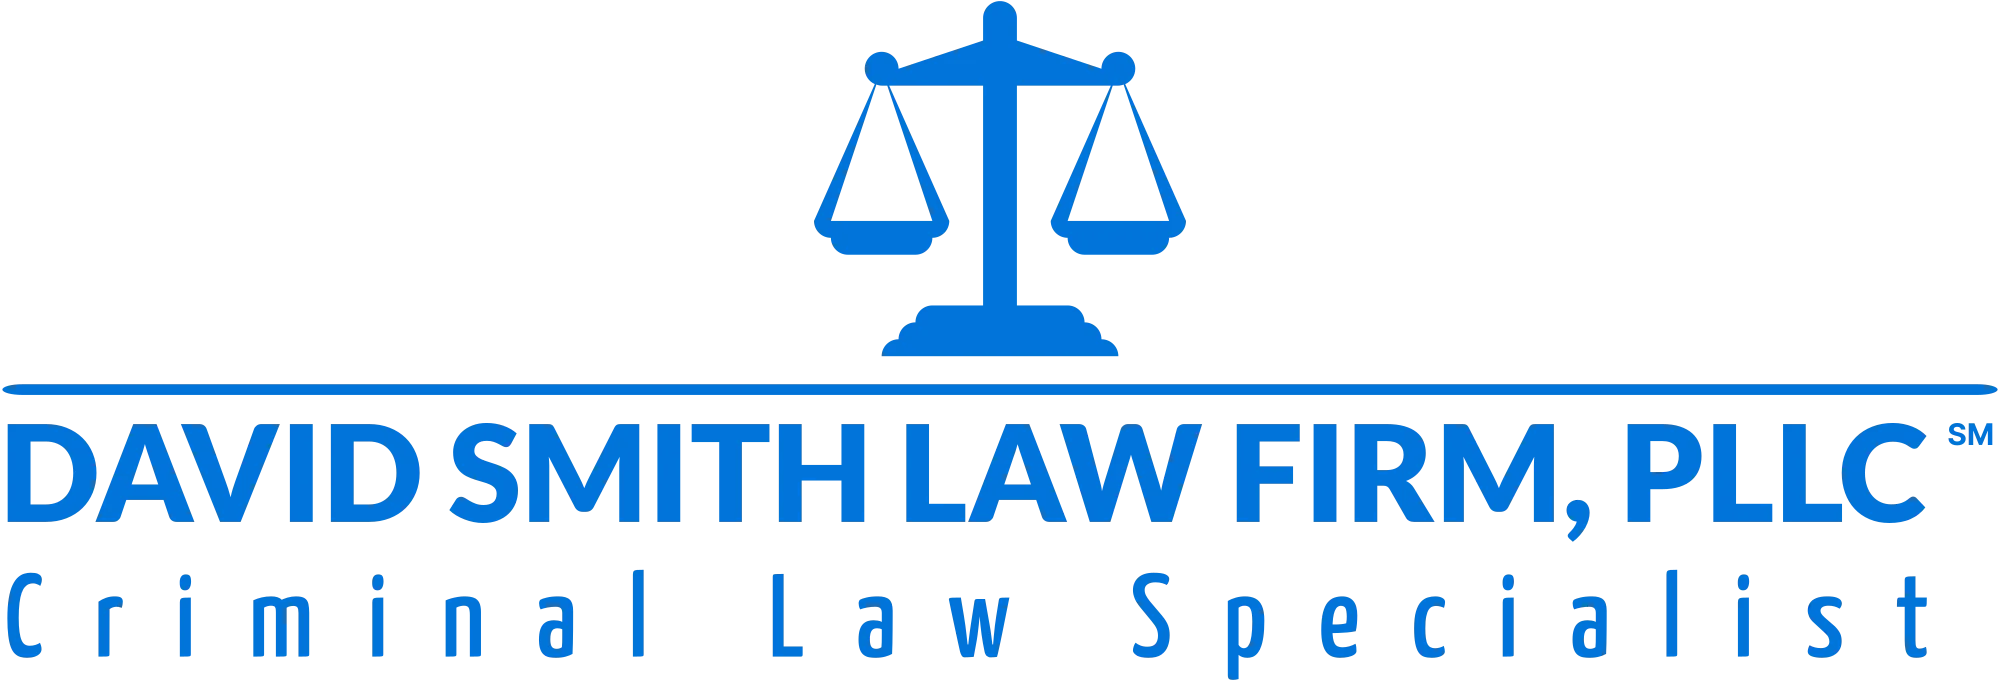 David Smith Law Firm, PLLC Logo